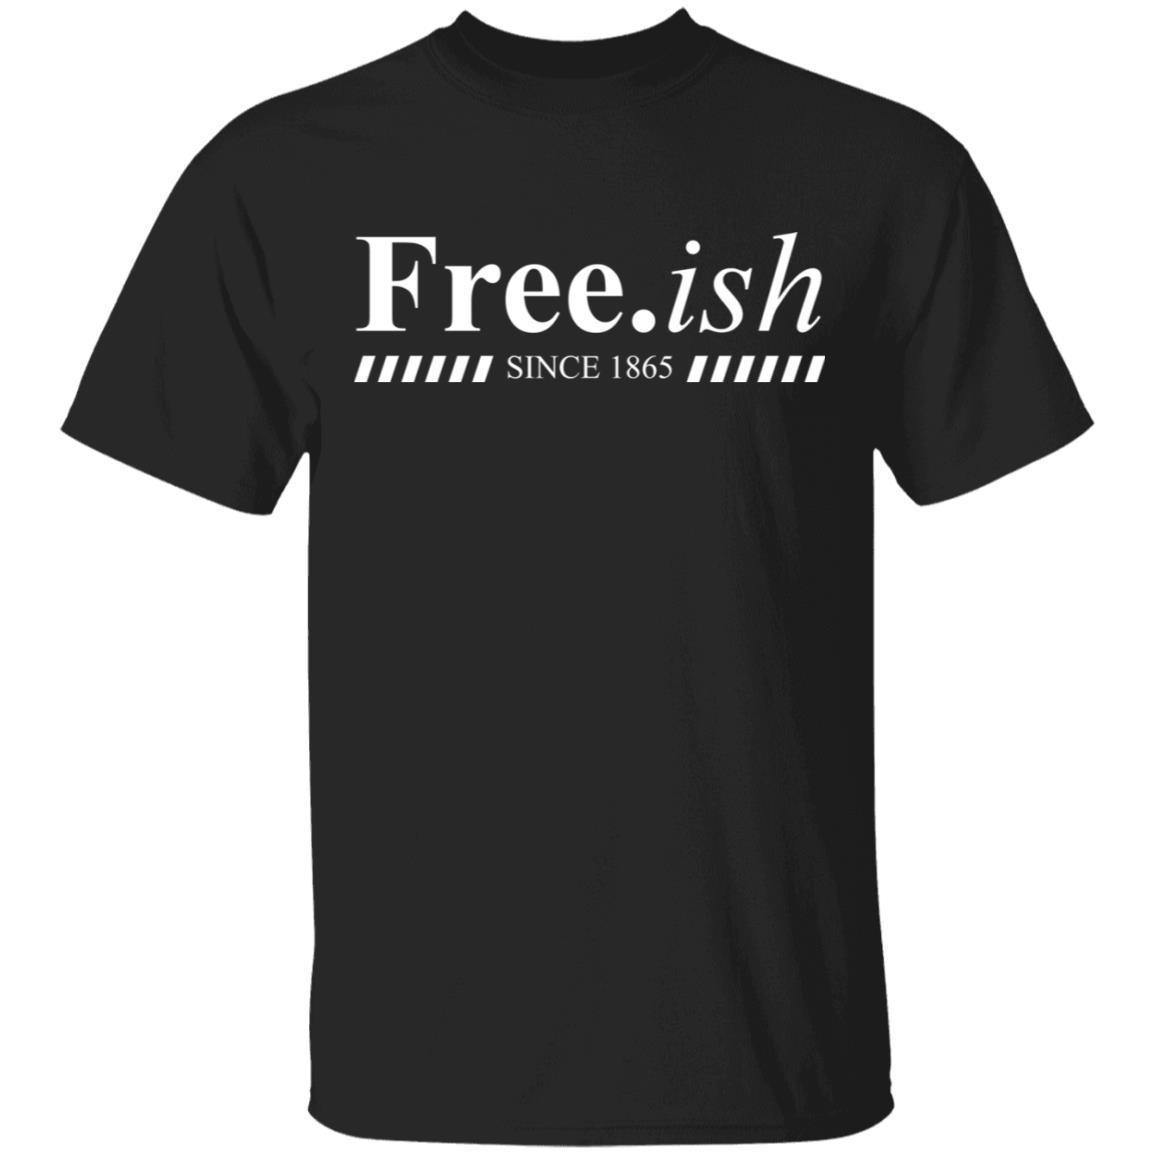 Free.ish Since 1865 T-shirt